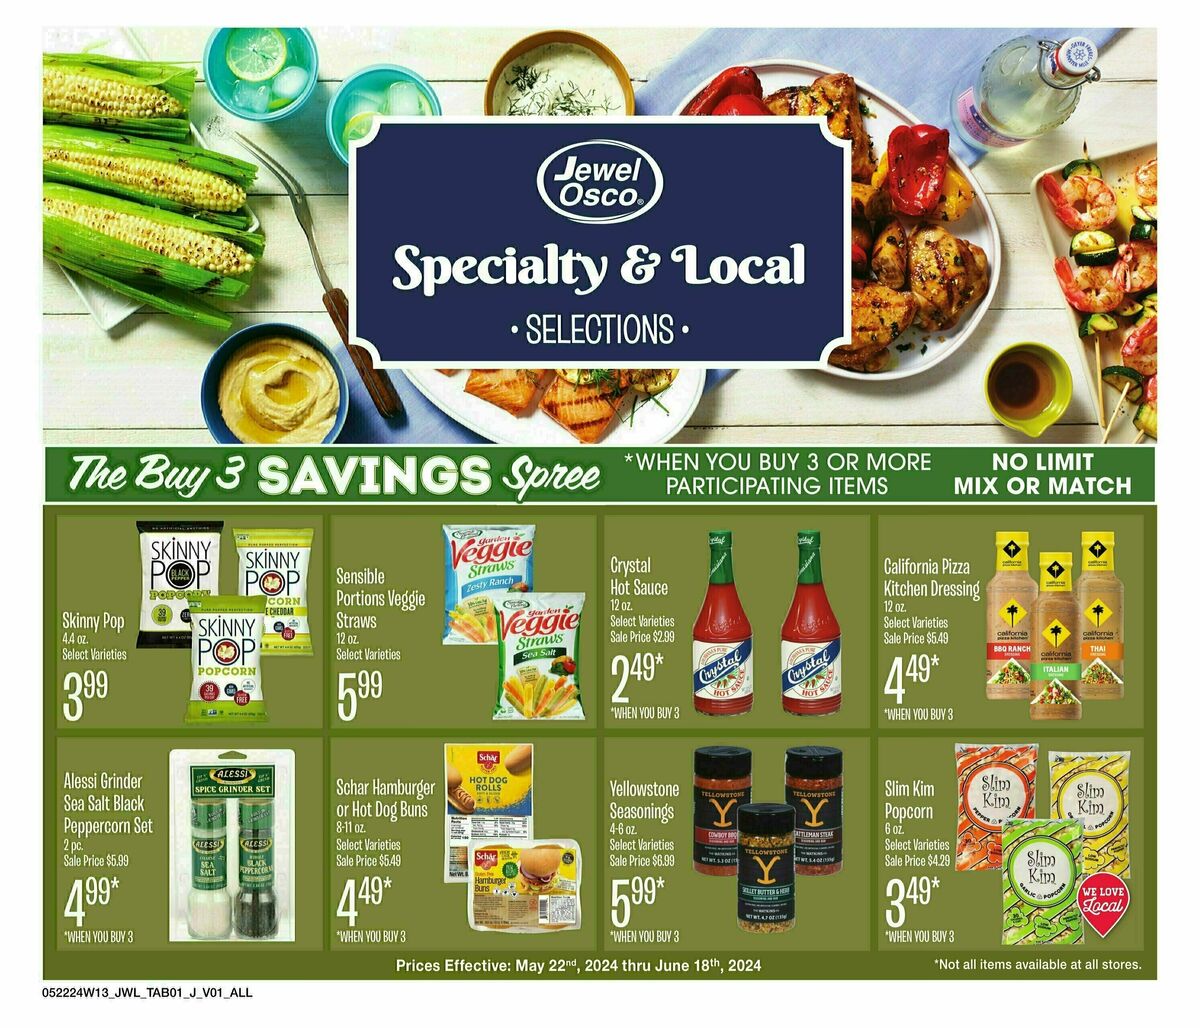 Jewel Osco Organics Guide Weekly Ad from May 22